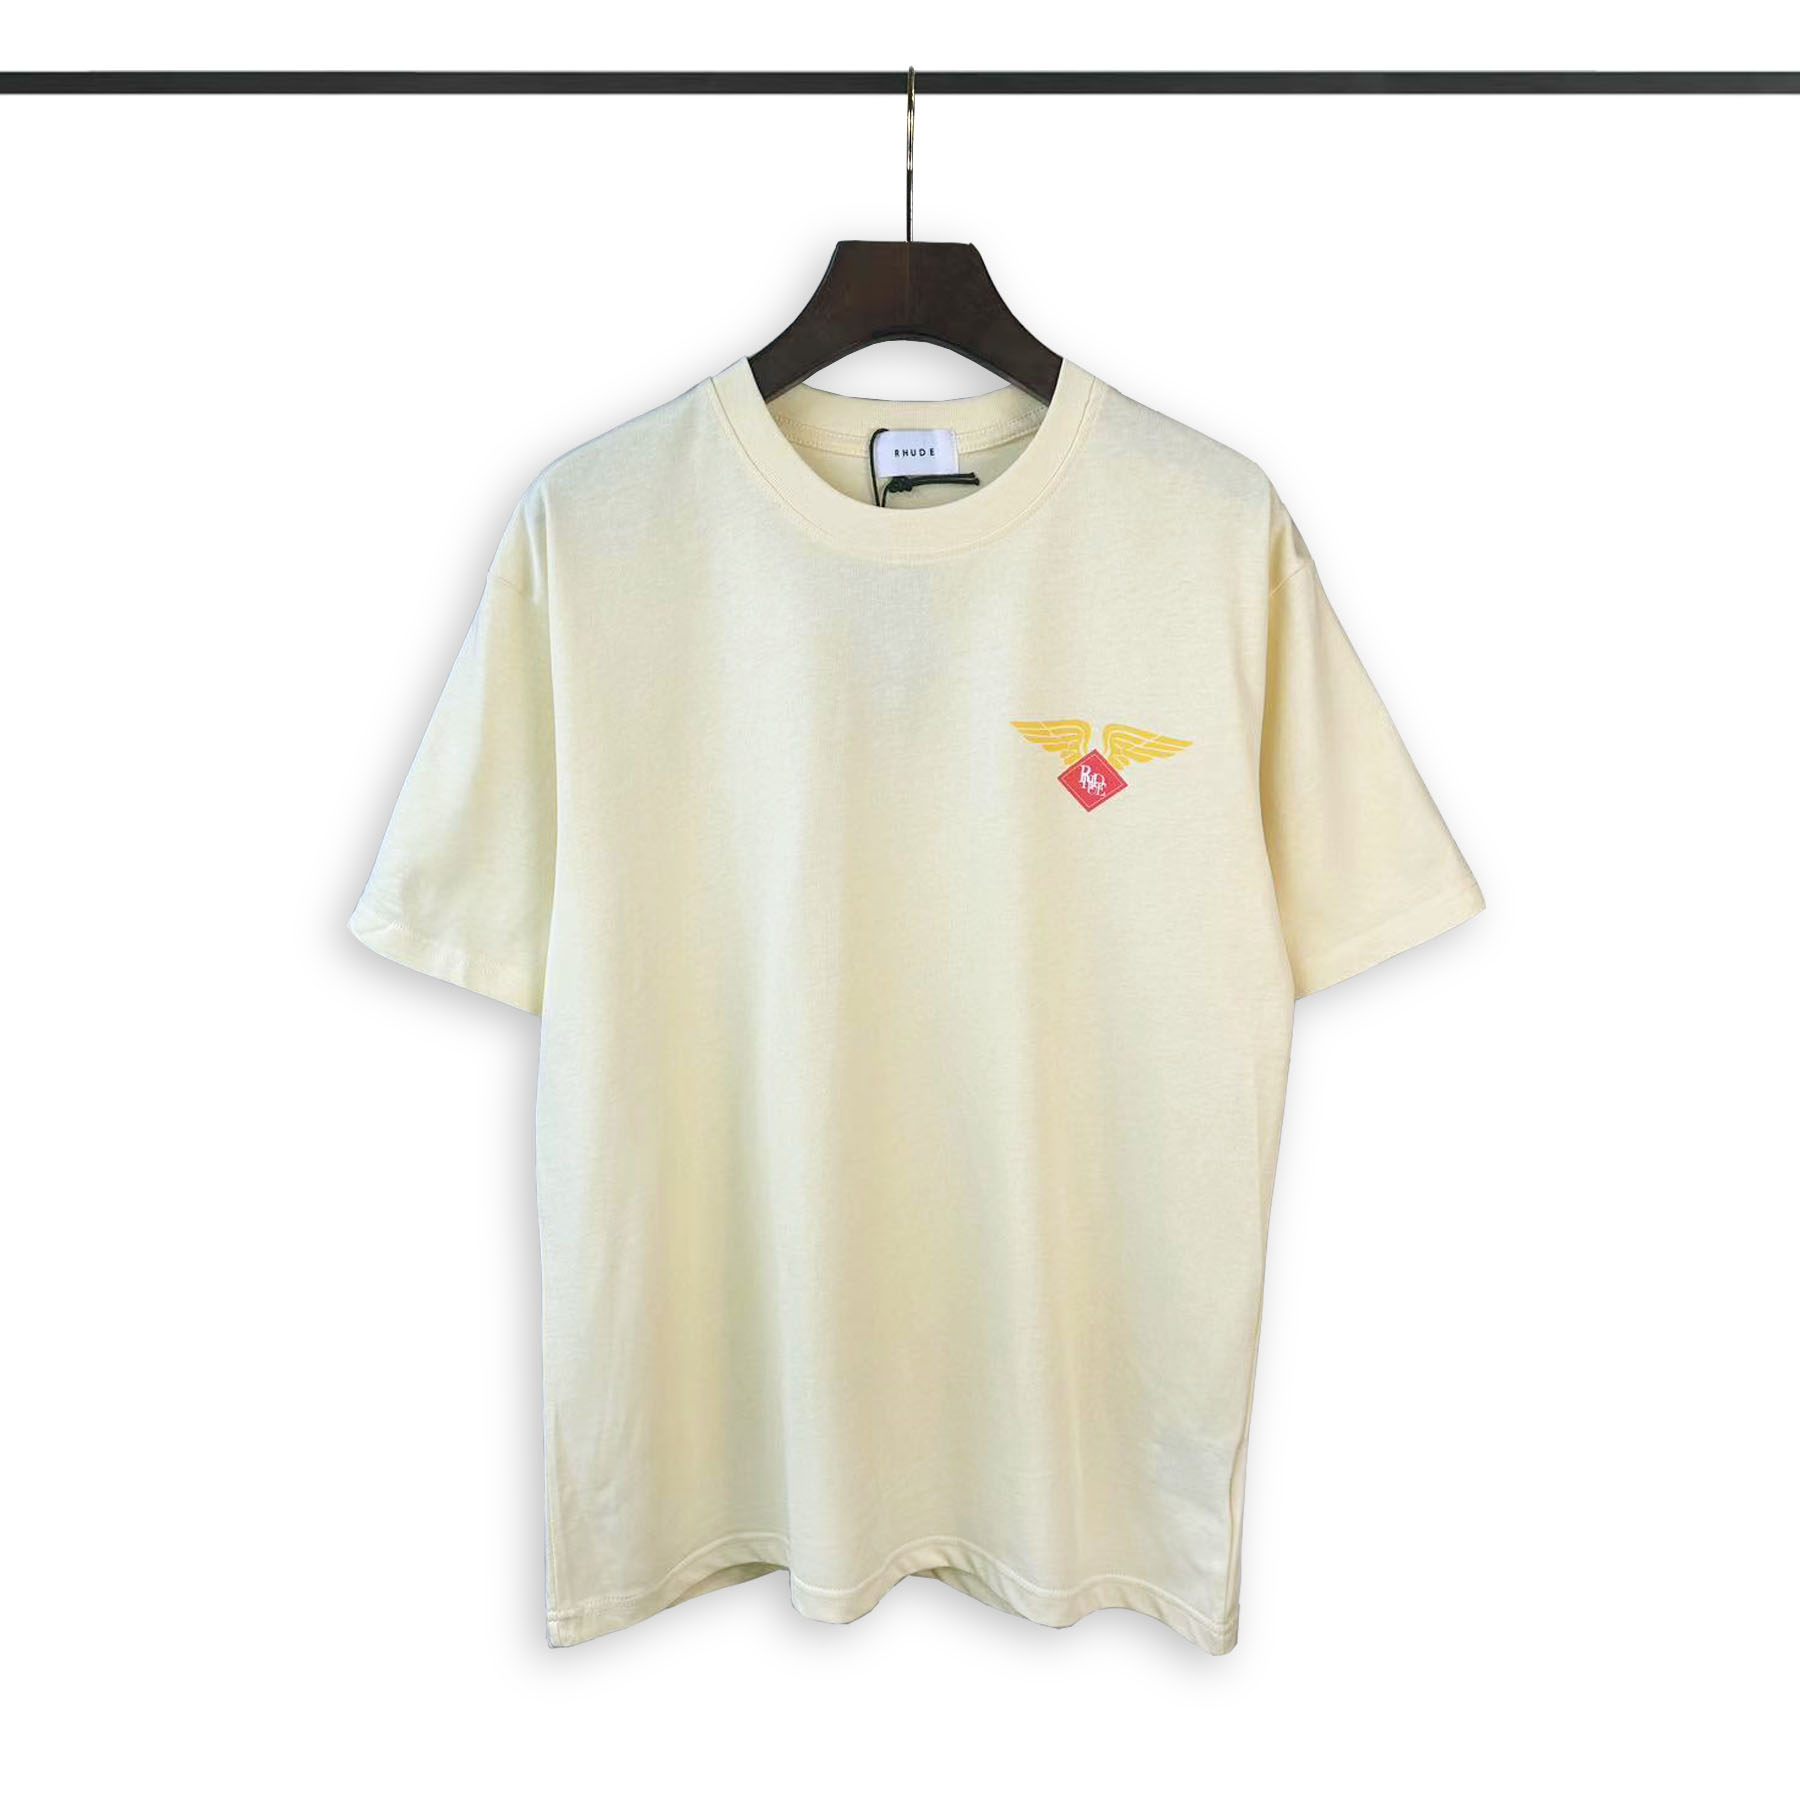 Rhude Clothing T-Shirt Apricot Color Black White Printing Short Sleeve